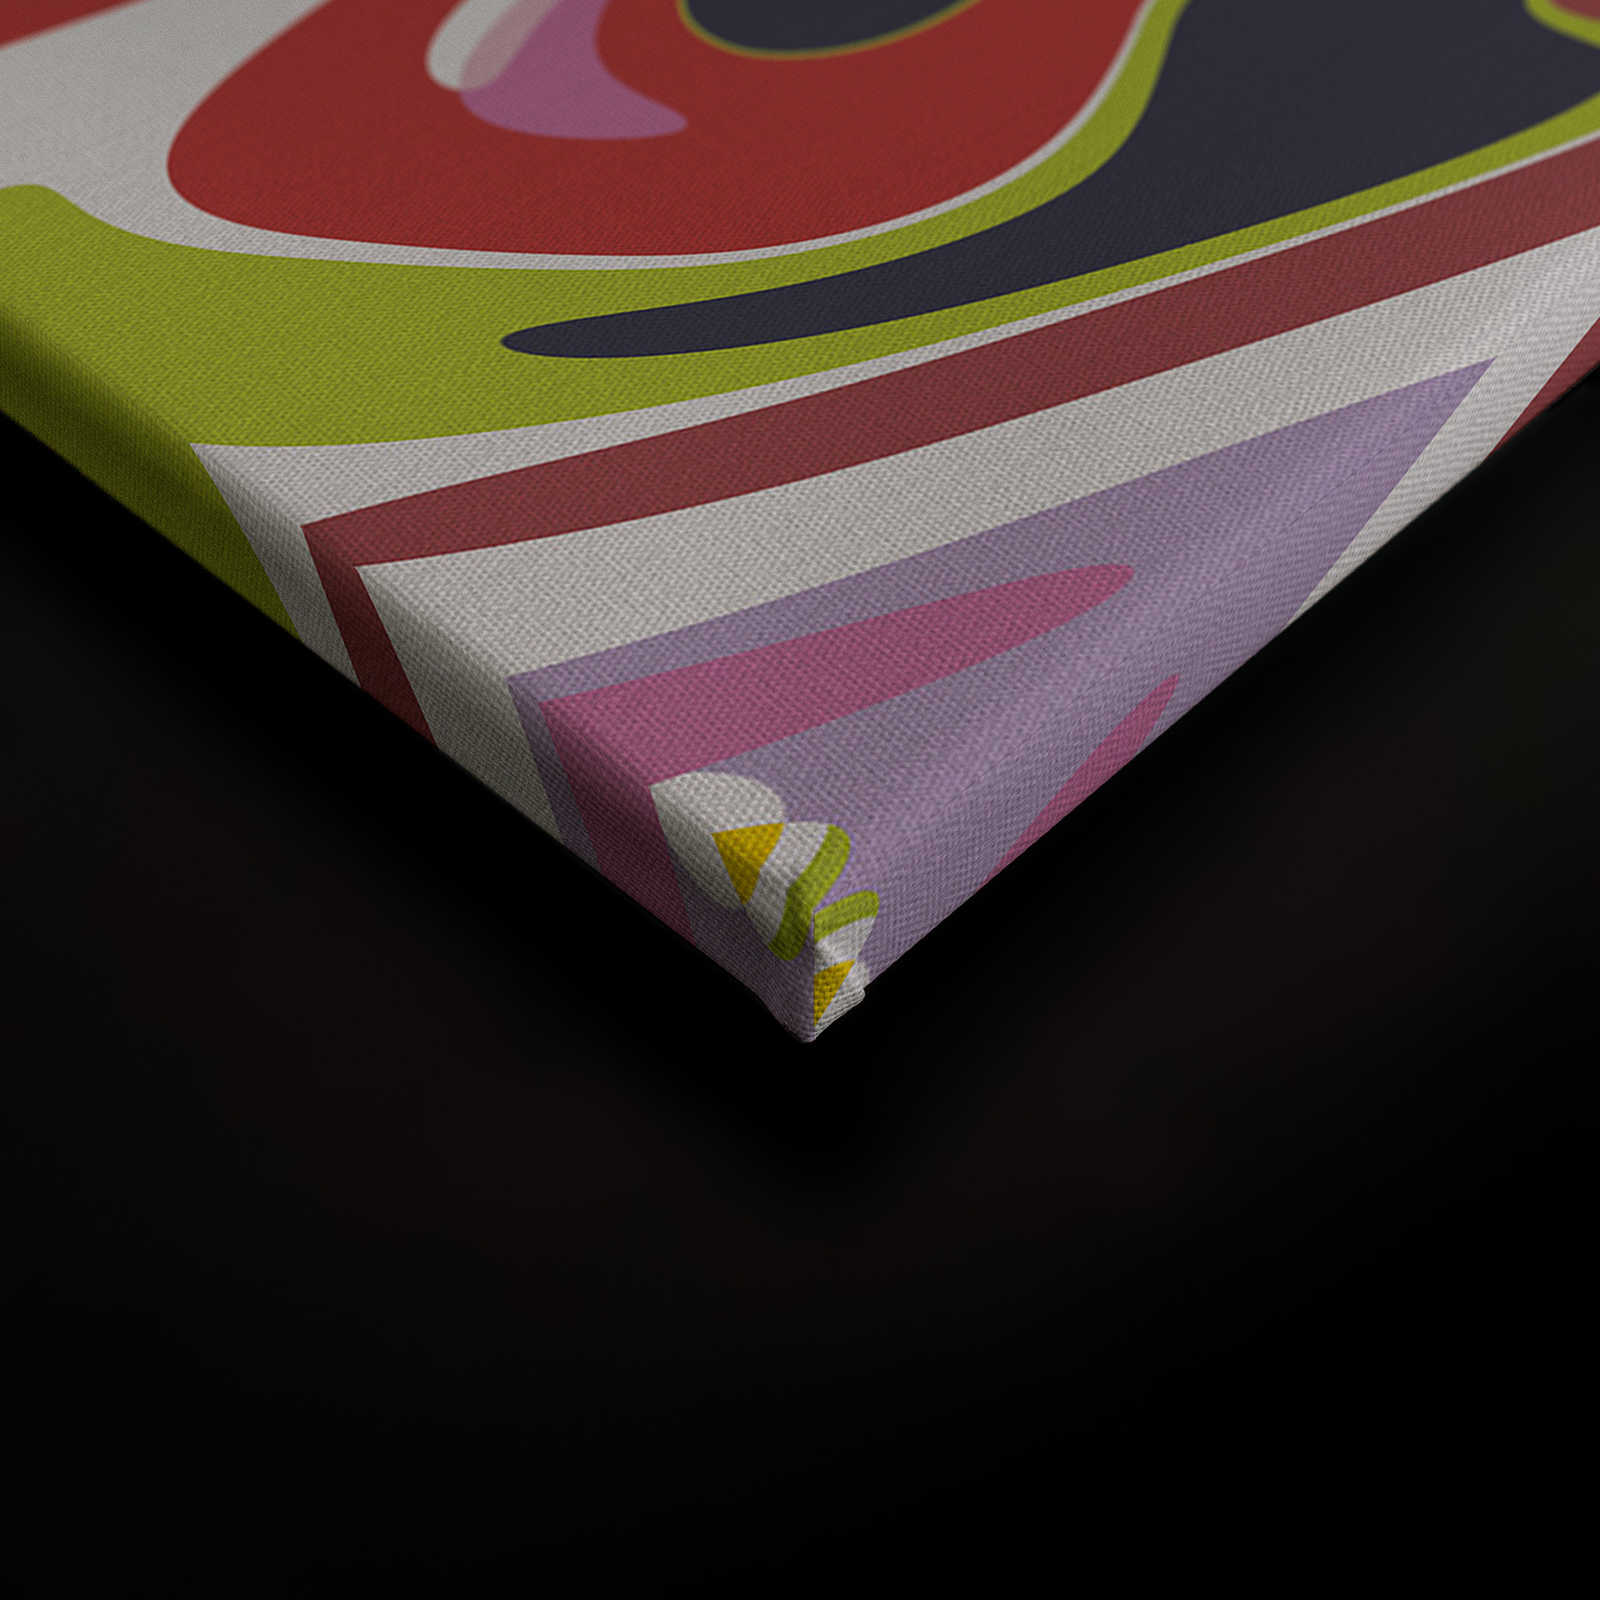             Leinwandbild abstraktes Farbgemisch buntes Muster – 0,90 m x 0,60 m
        